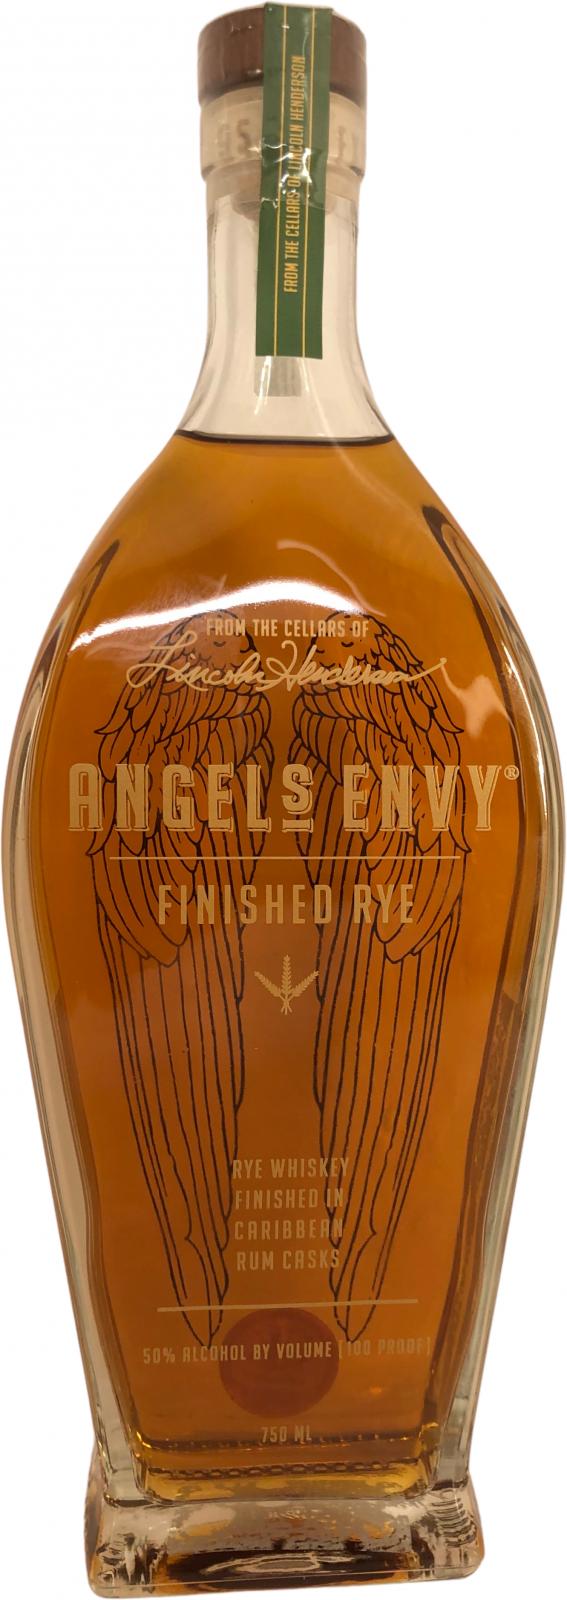 Angel's Envy Carribean Rum Casks Finished Batch 10 K 50% 750ml